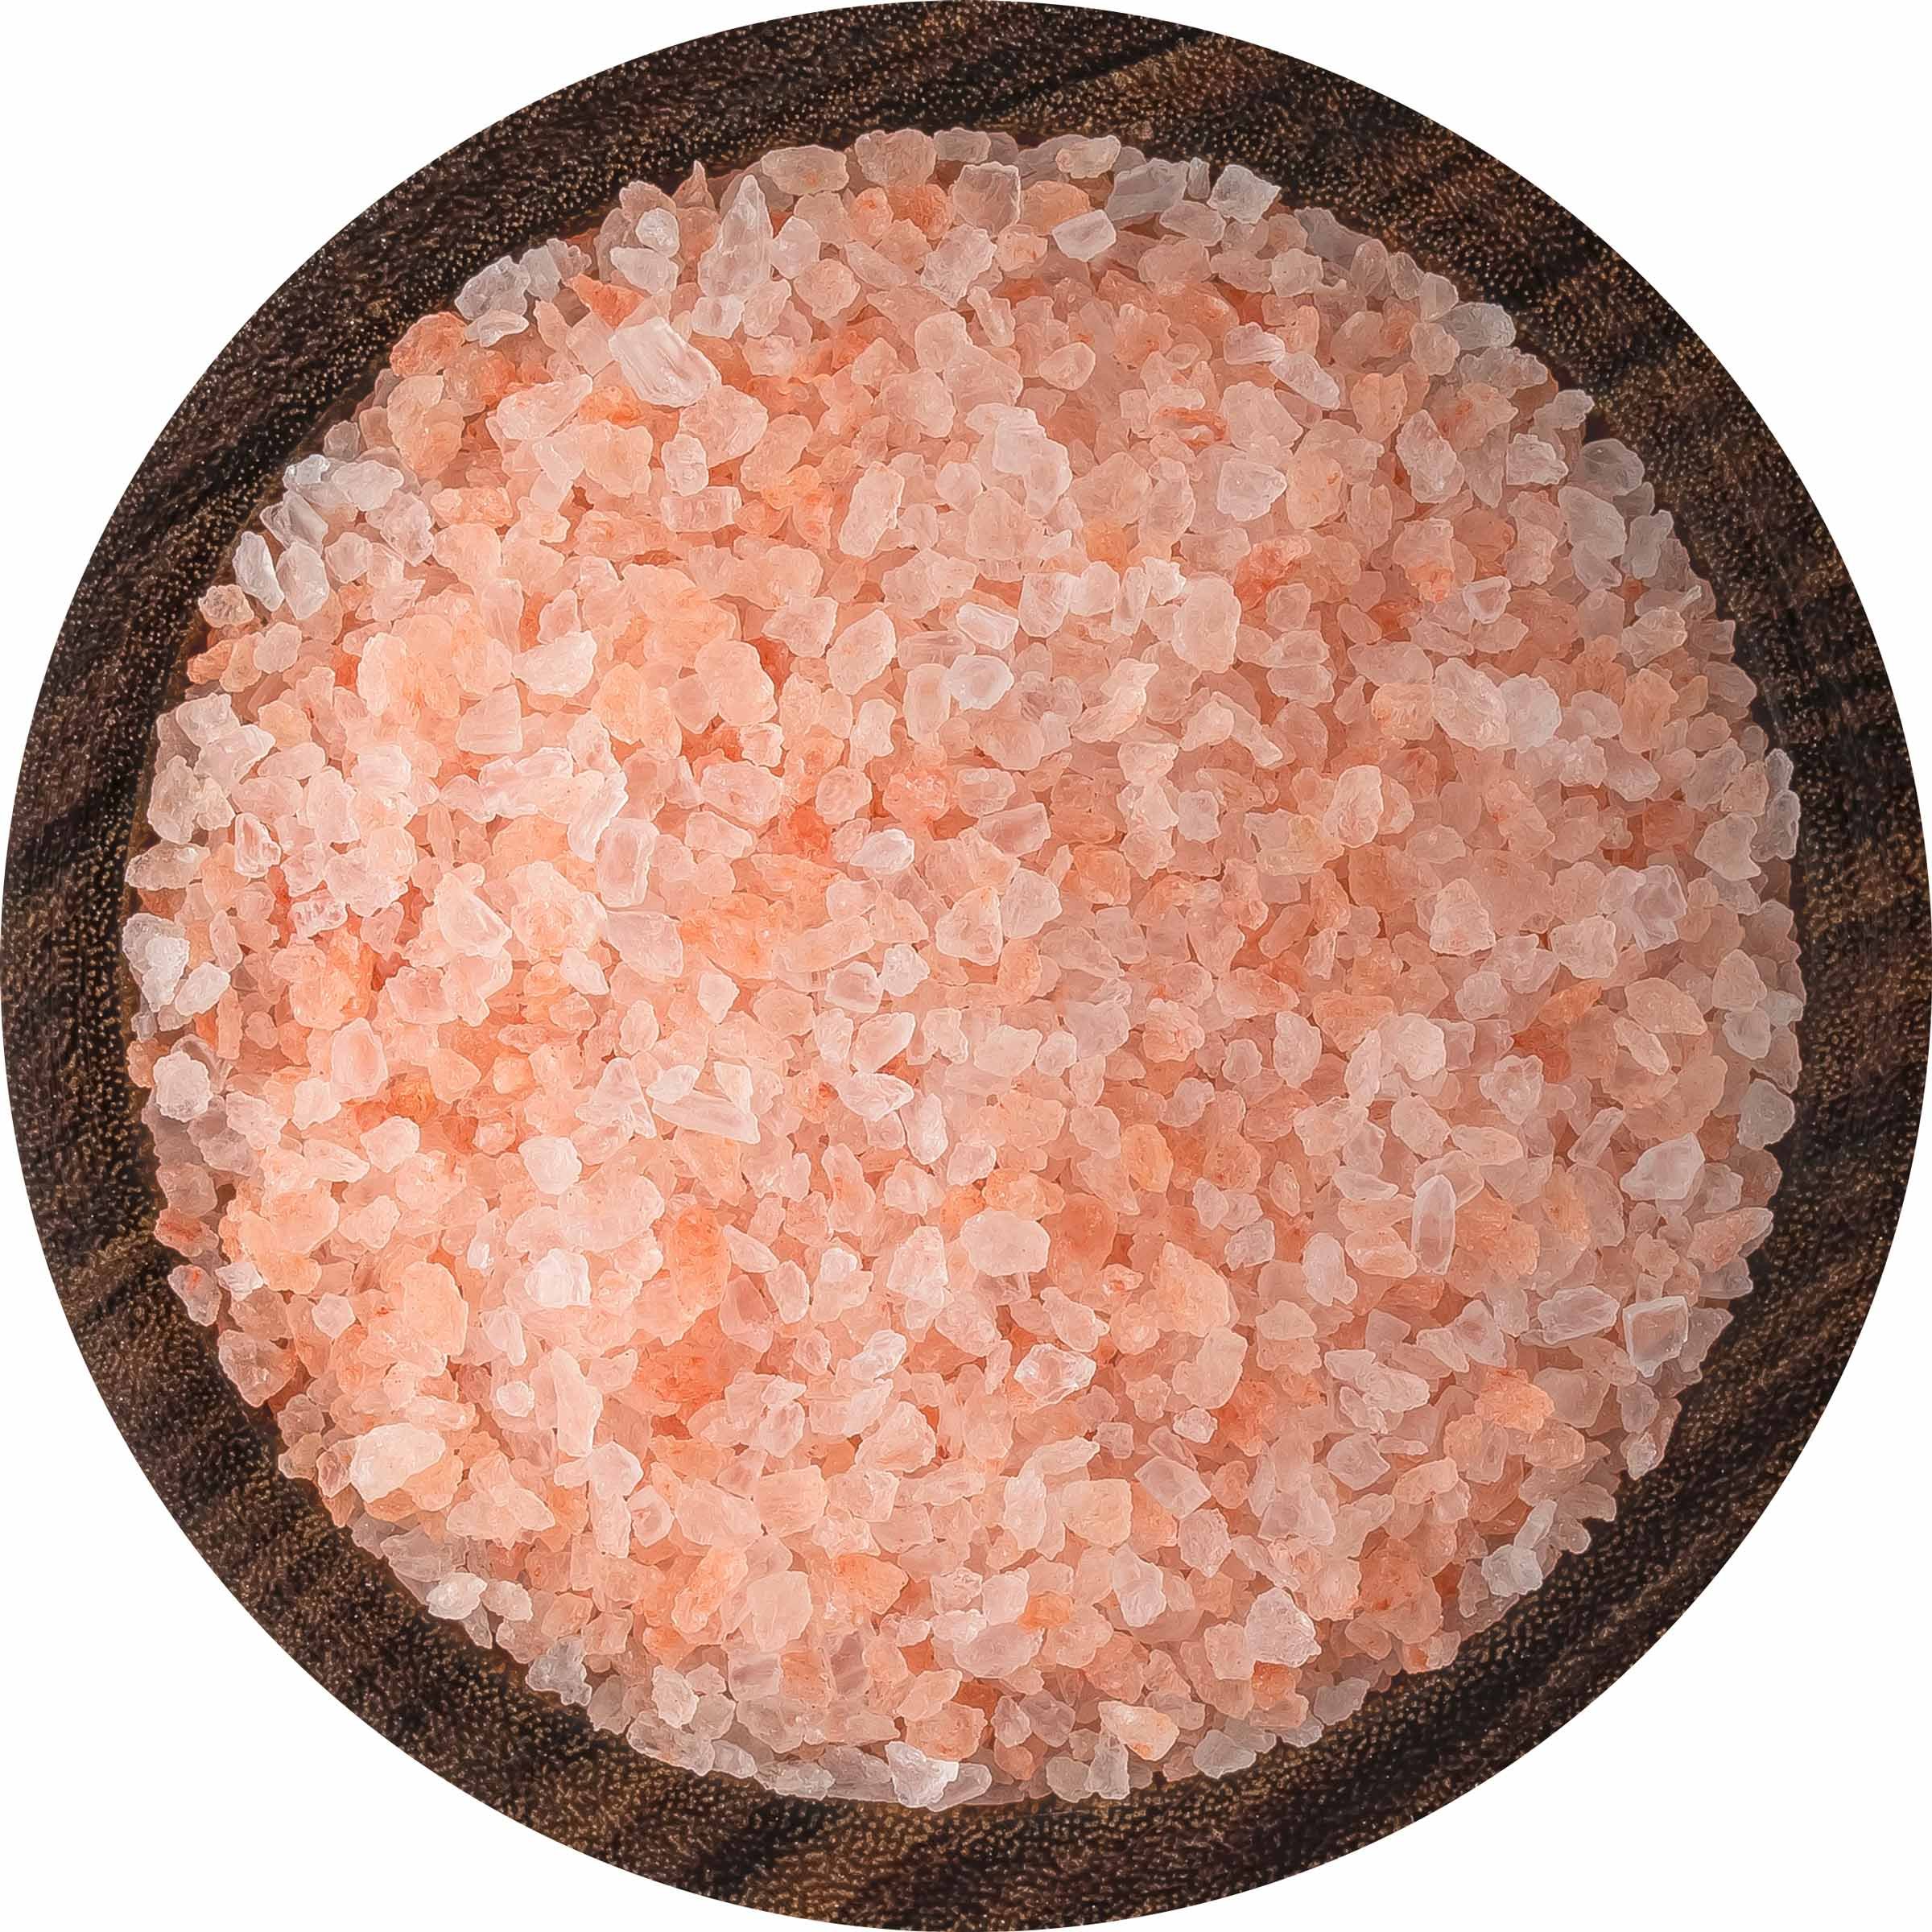 What Is Himalayan Salt?